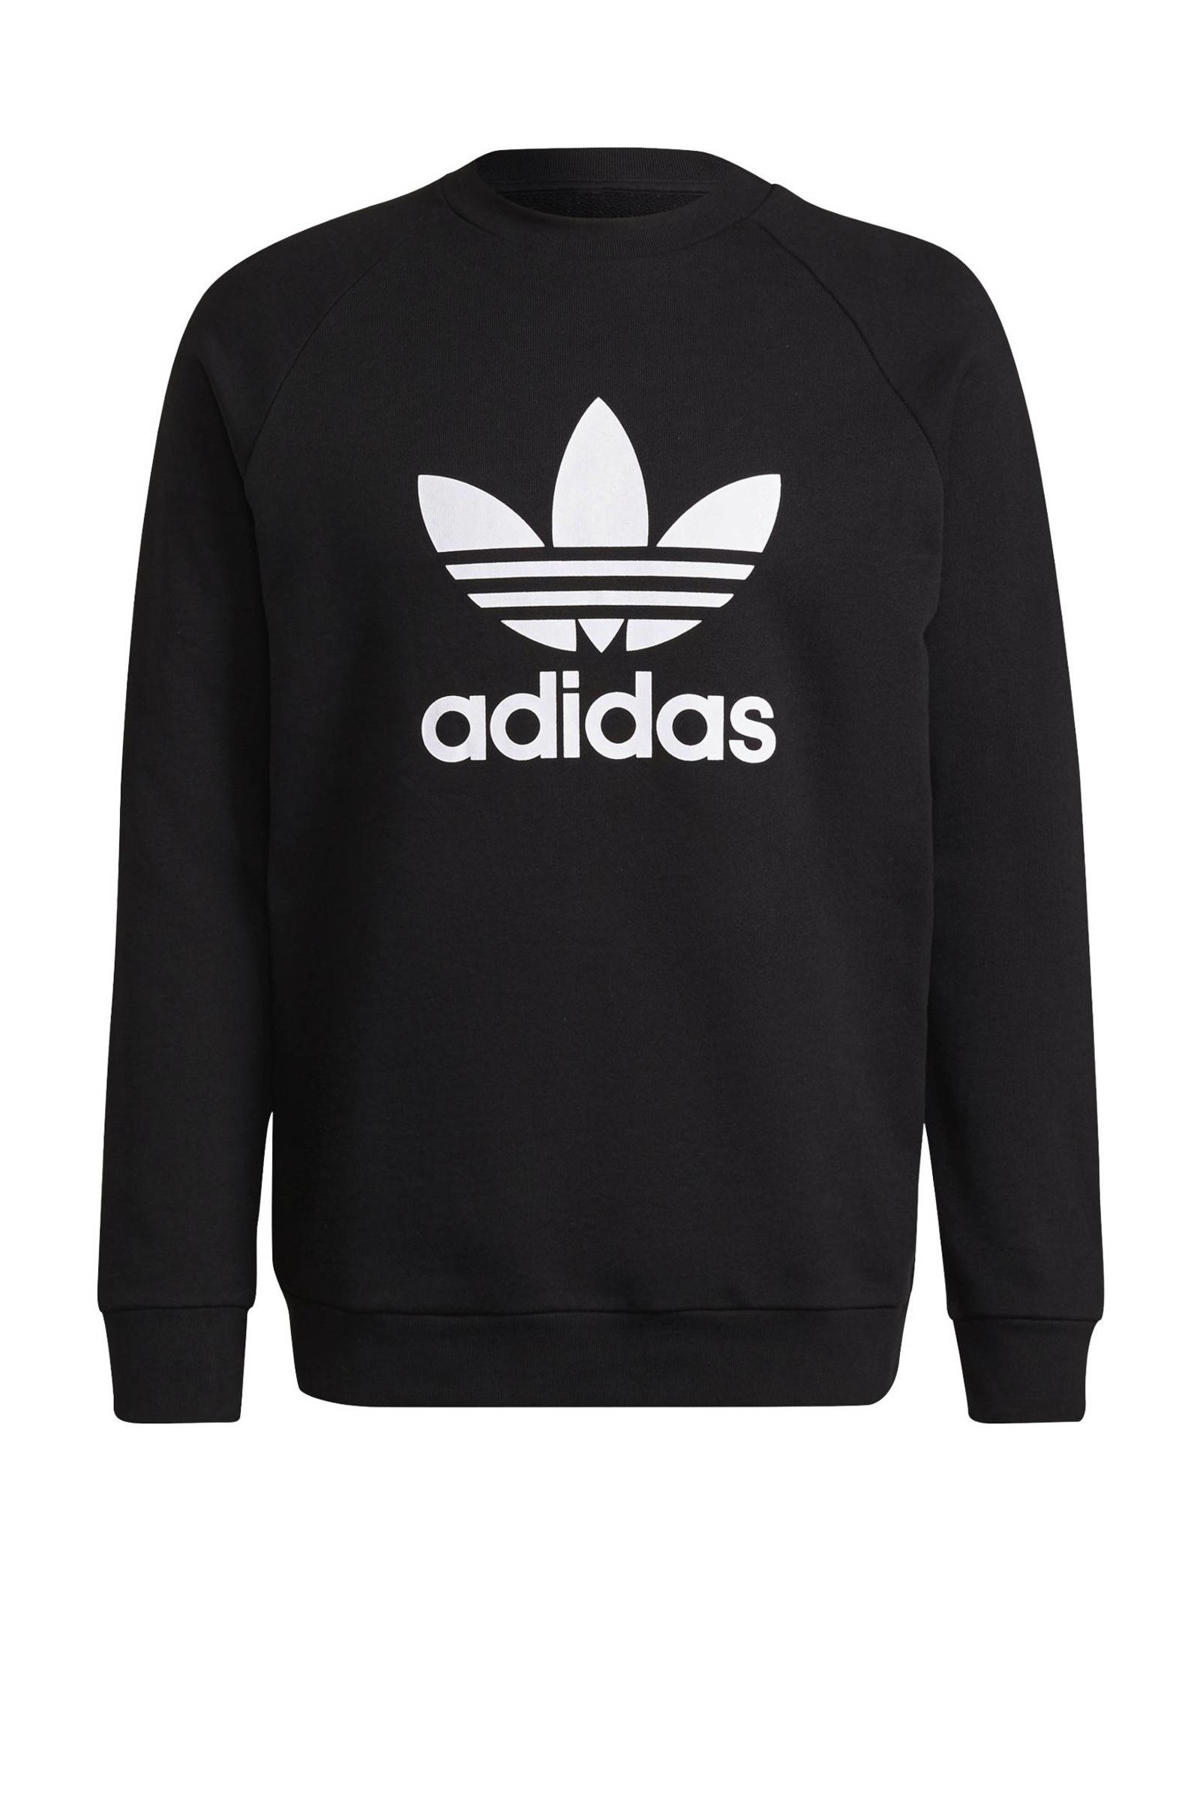 som Informeer Stevig adidas Originals Adicolor sweater zwart/wit | wehkamp